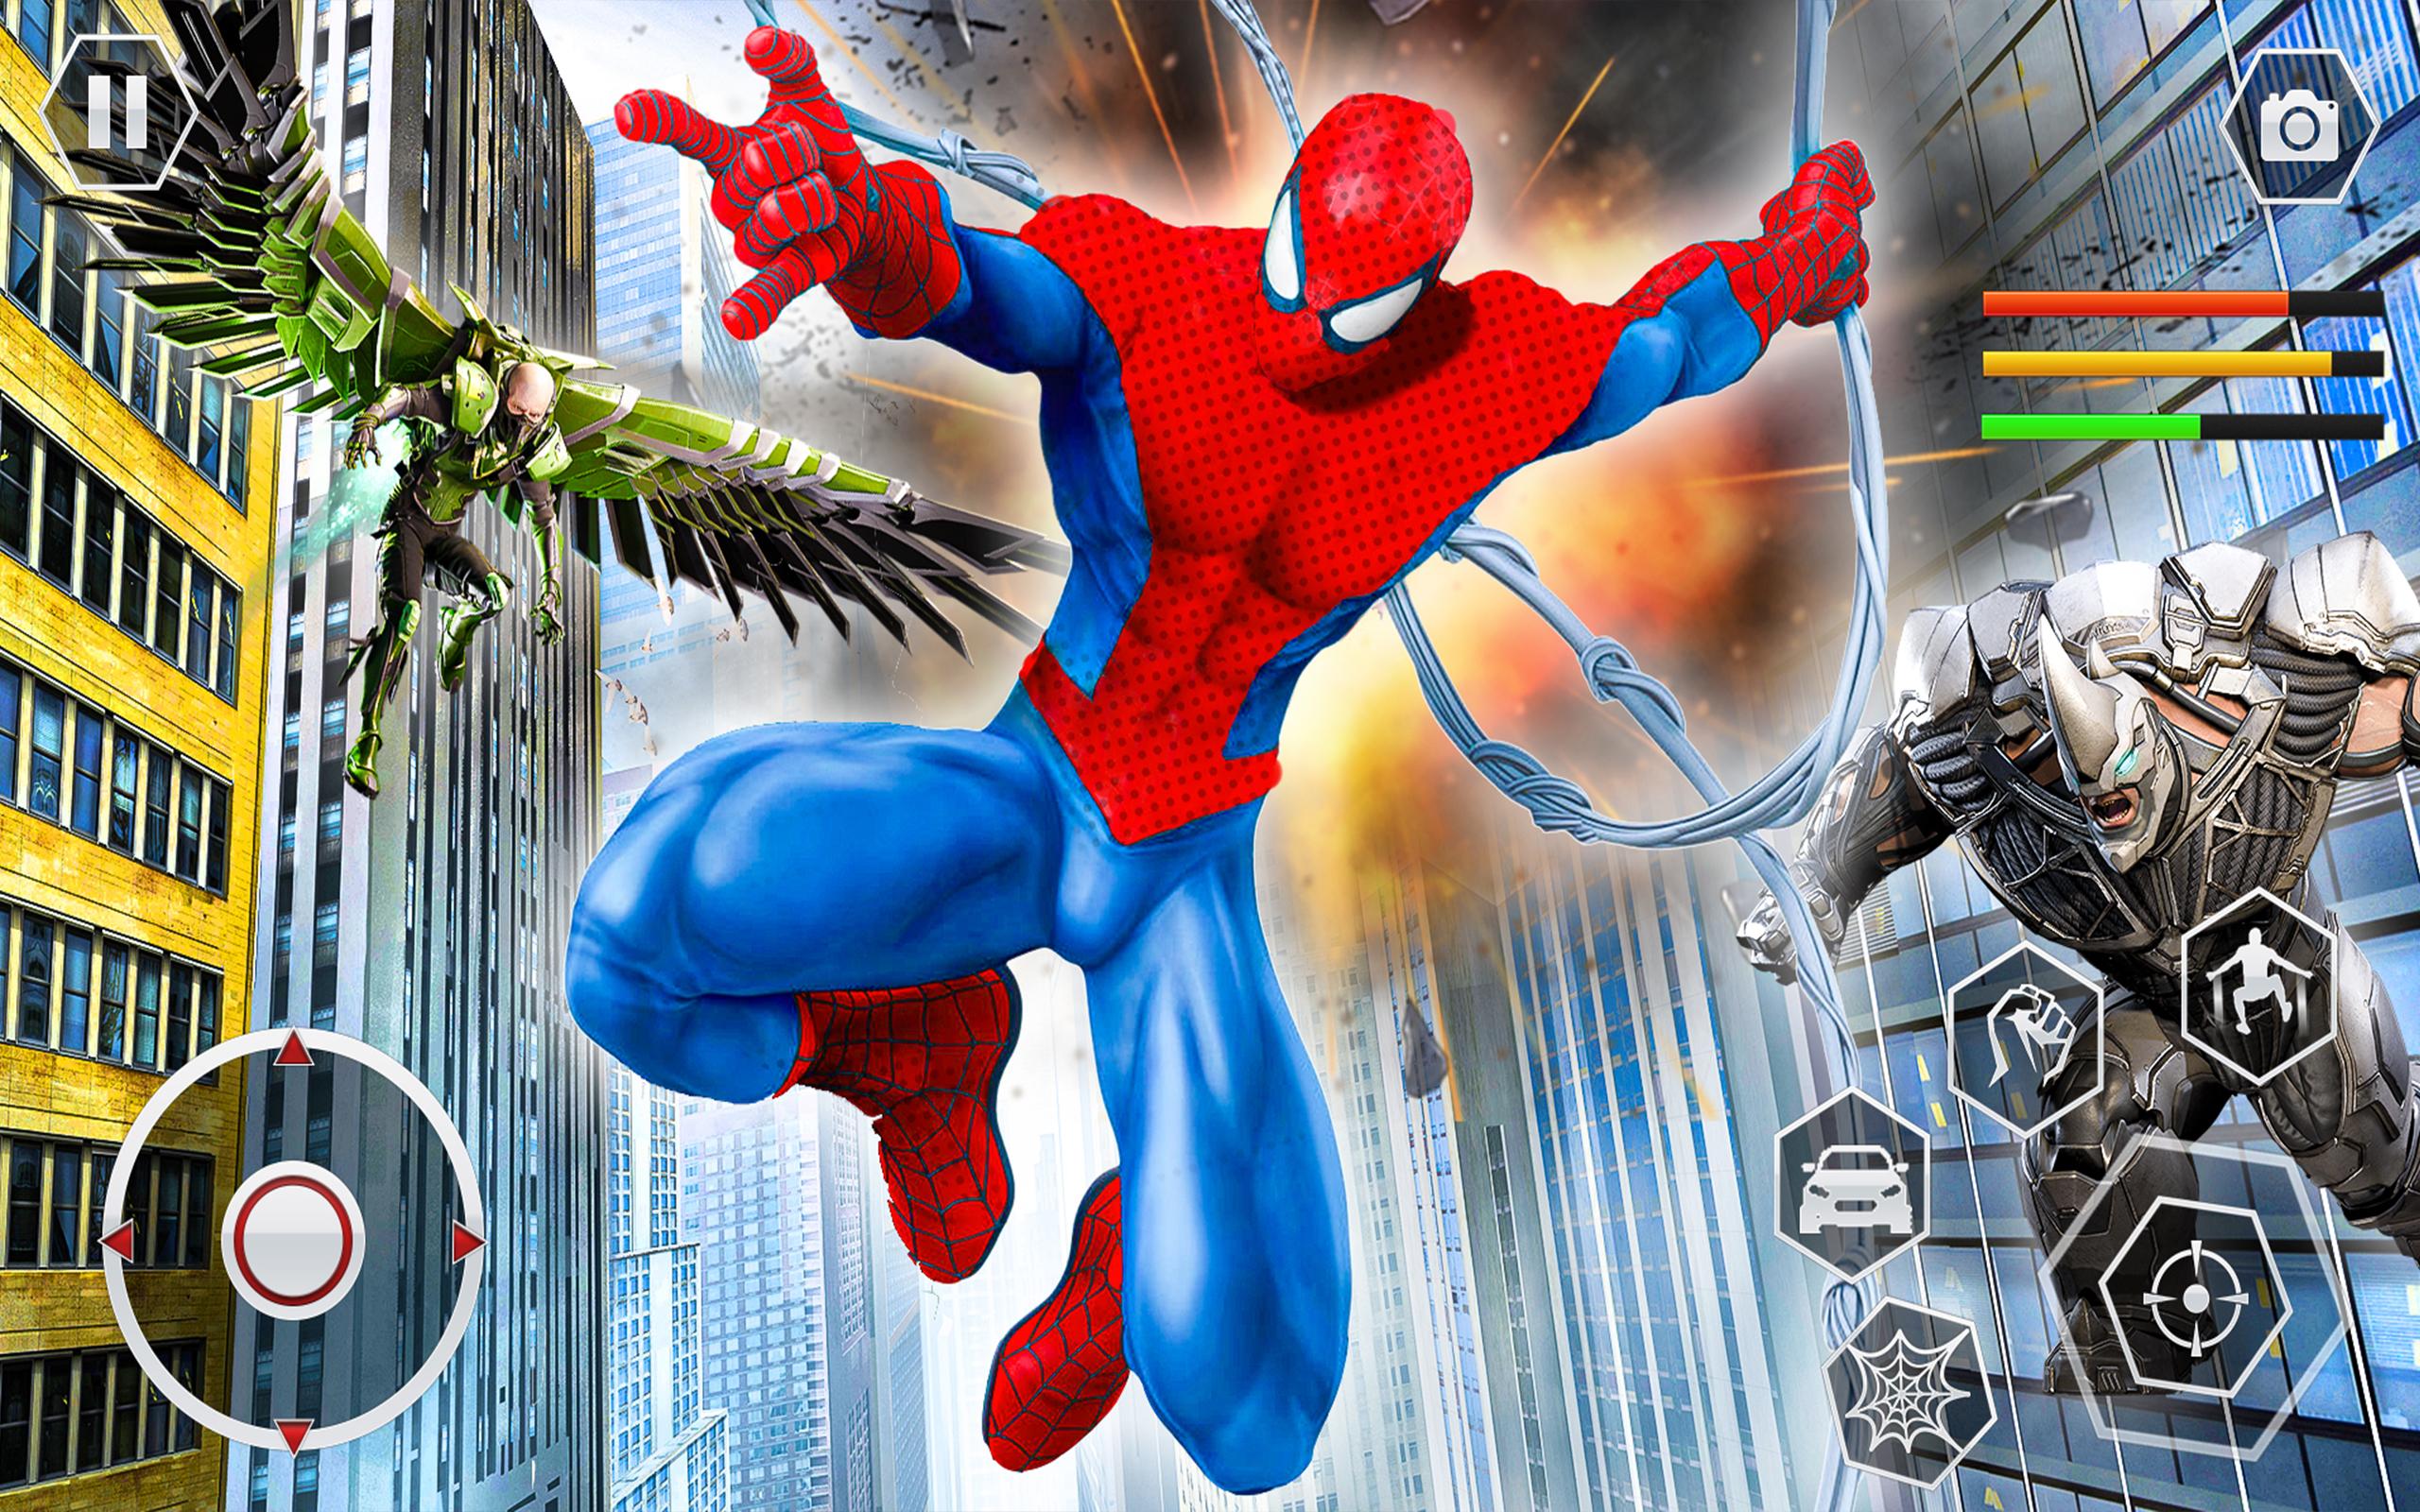 Spider Rope Superhero War Game - Crime City Battle 2.4 Screenshot 1